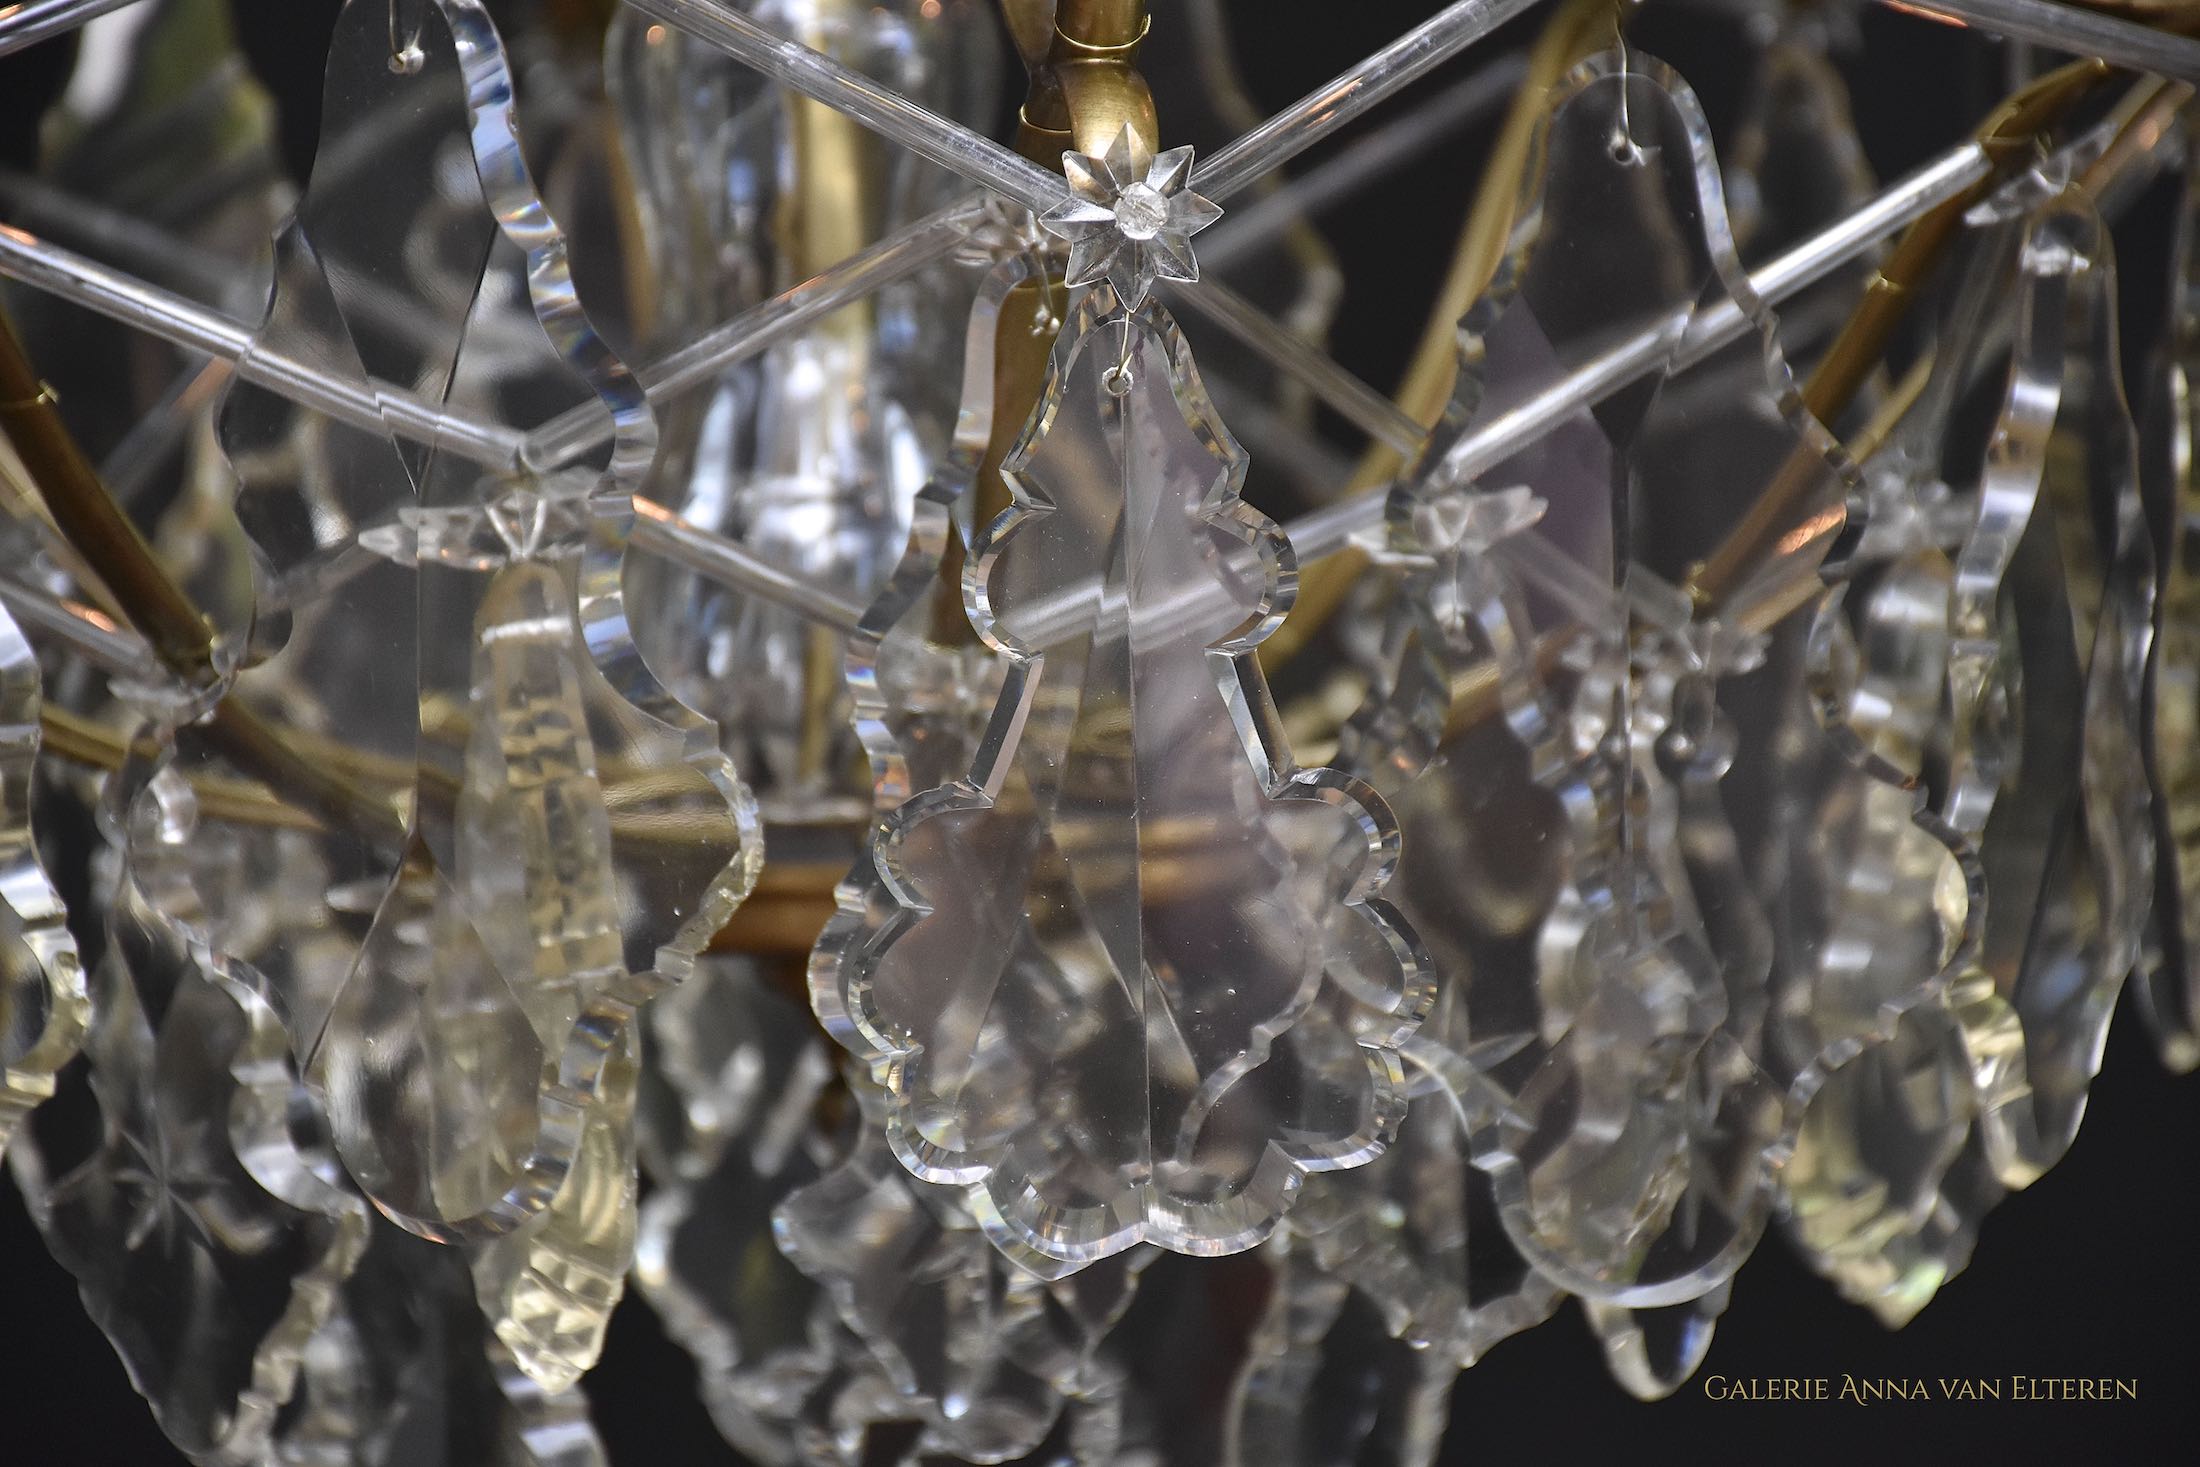 Antique Rococo style crystal chandelier